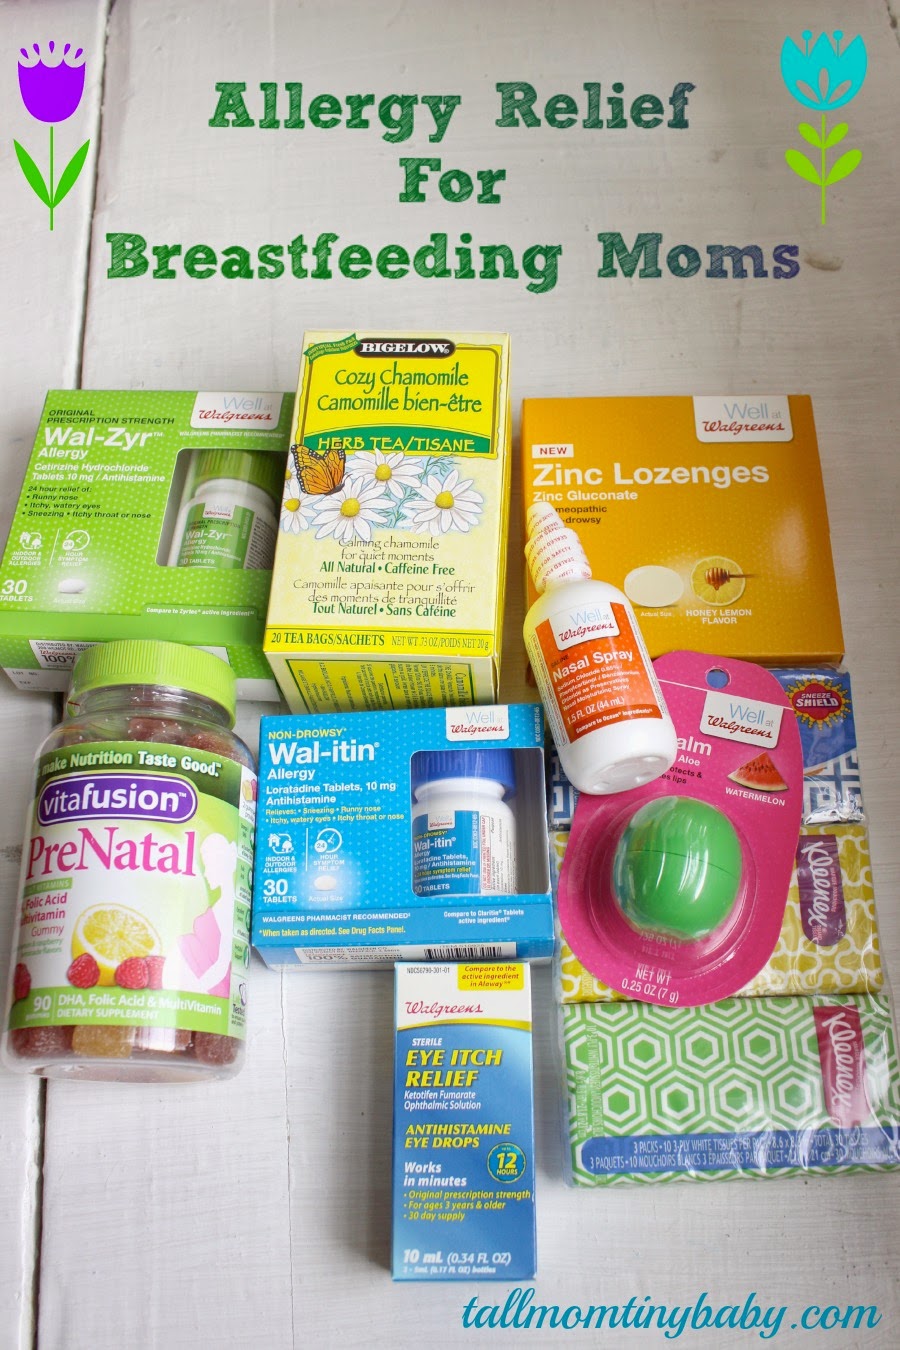 breastfeeding-mom-allergy-relief-well-at-walgreens.jpg